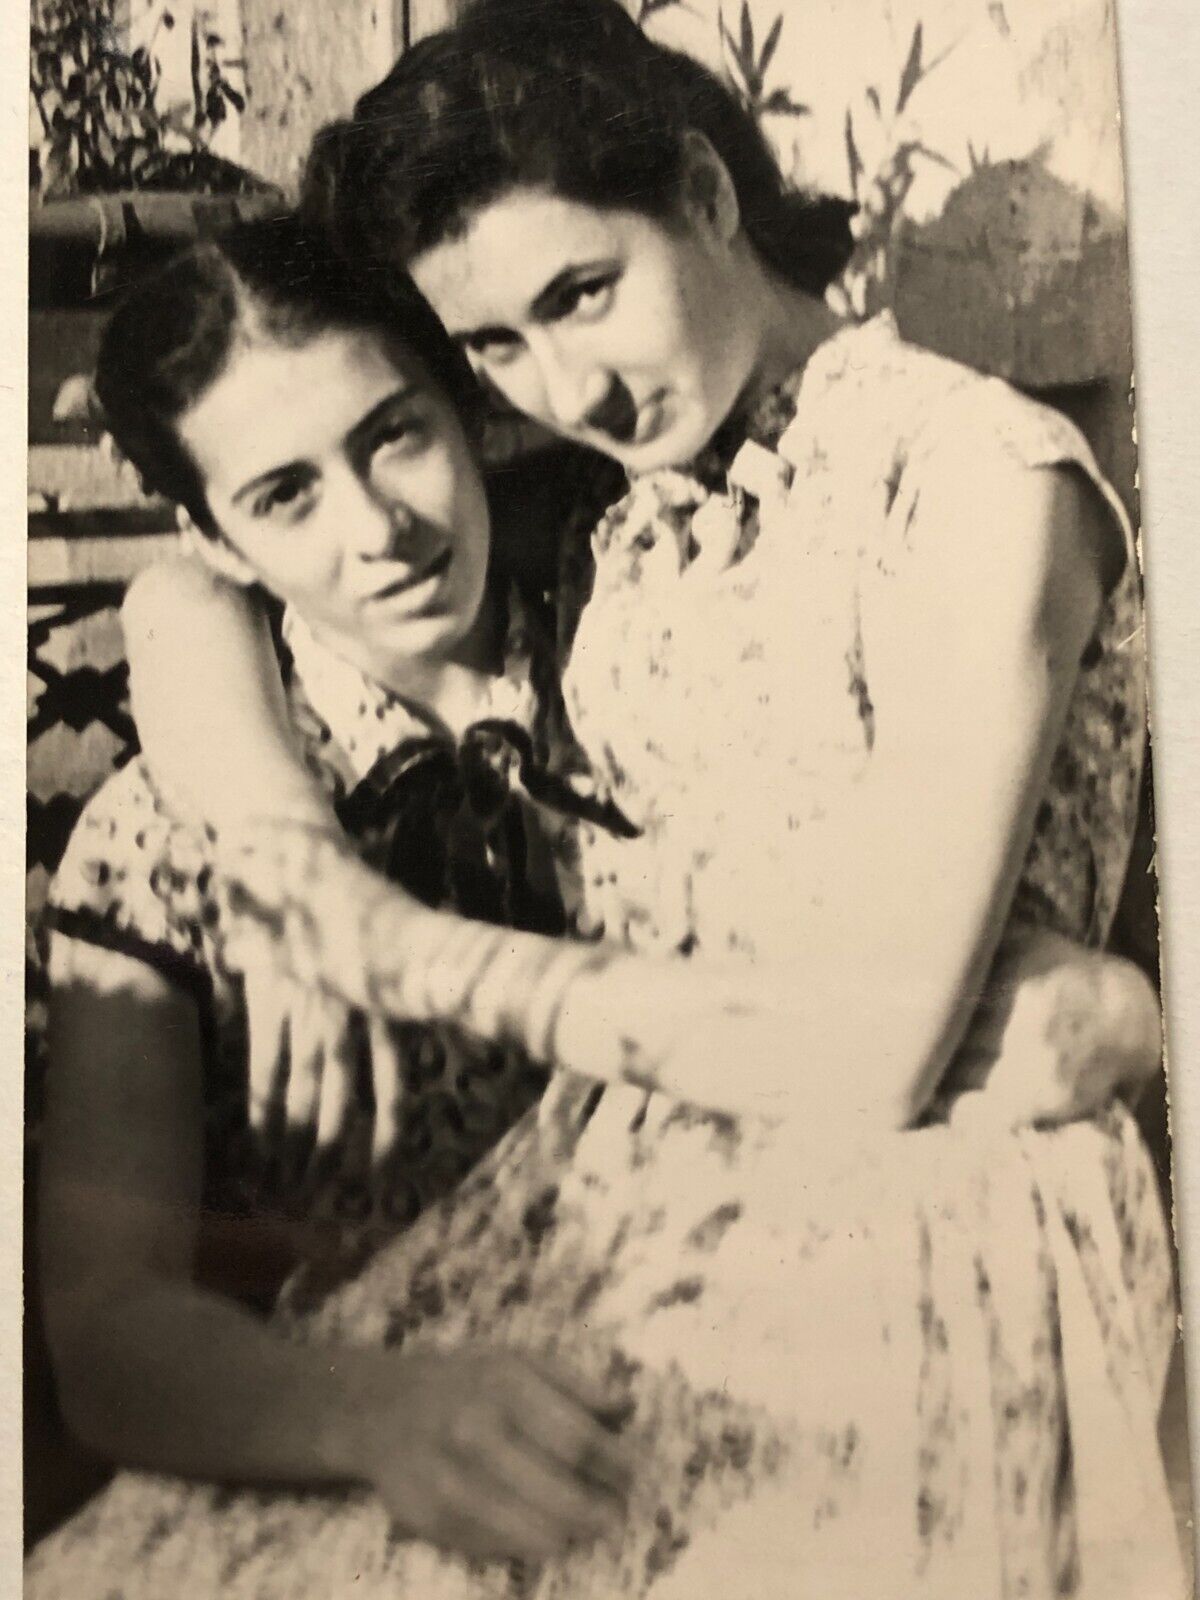 1957 Slim Pretty Women Love Hugs Sweet Girlfriends Vintage Photo Snapshot